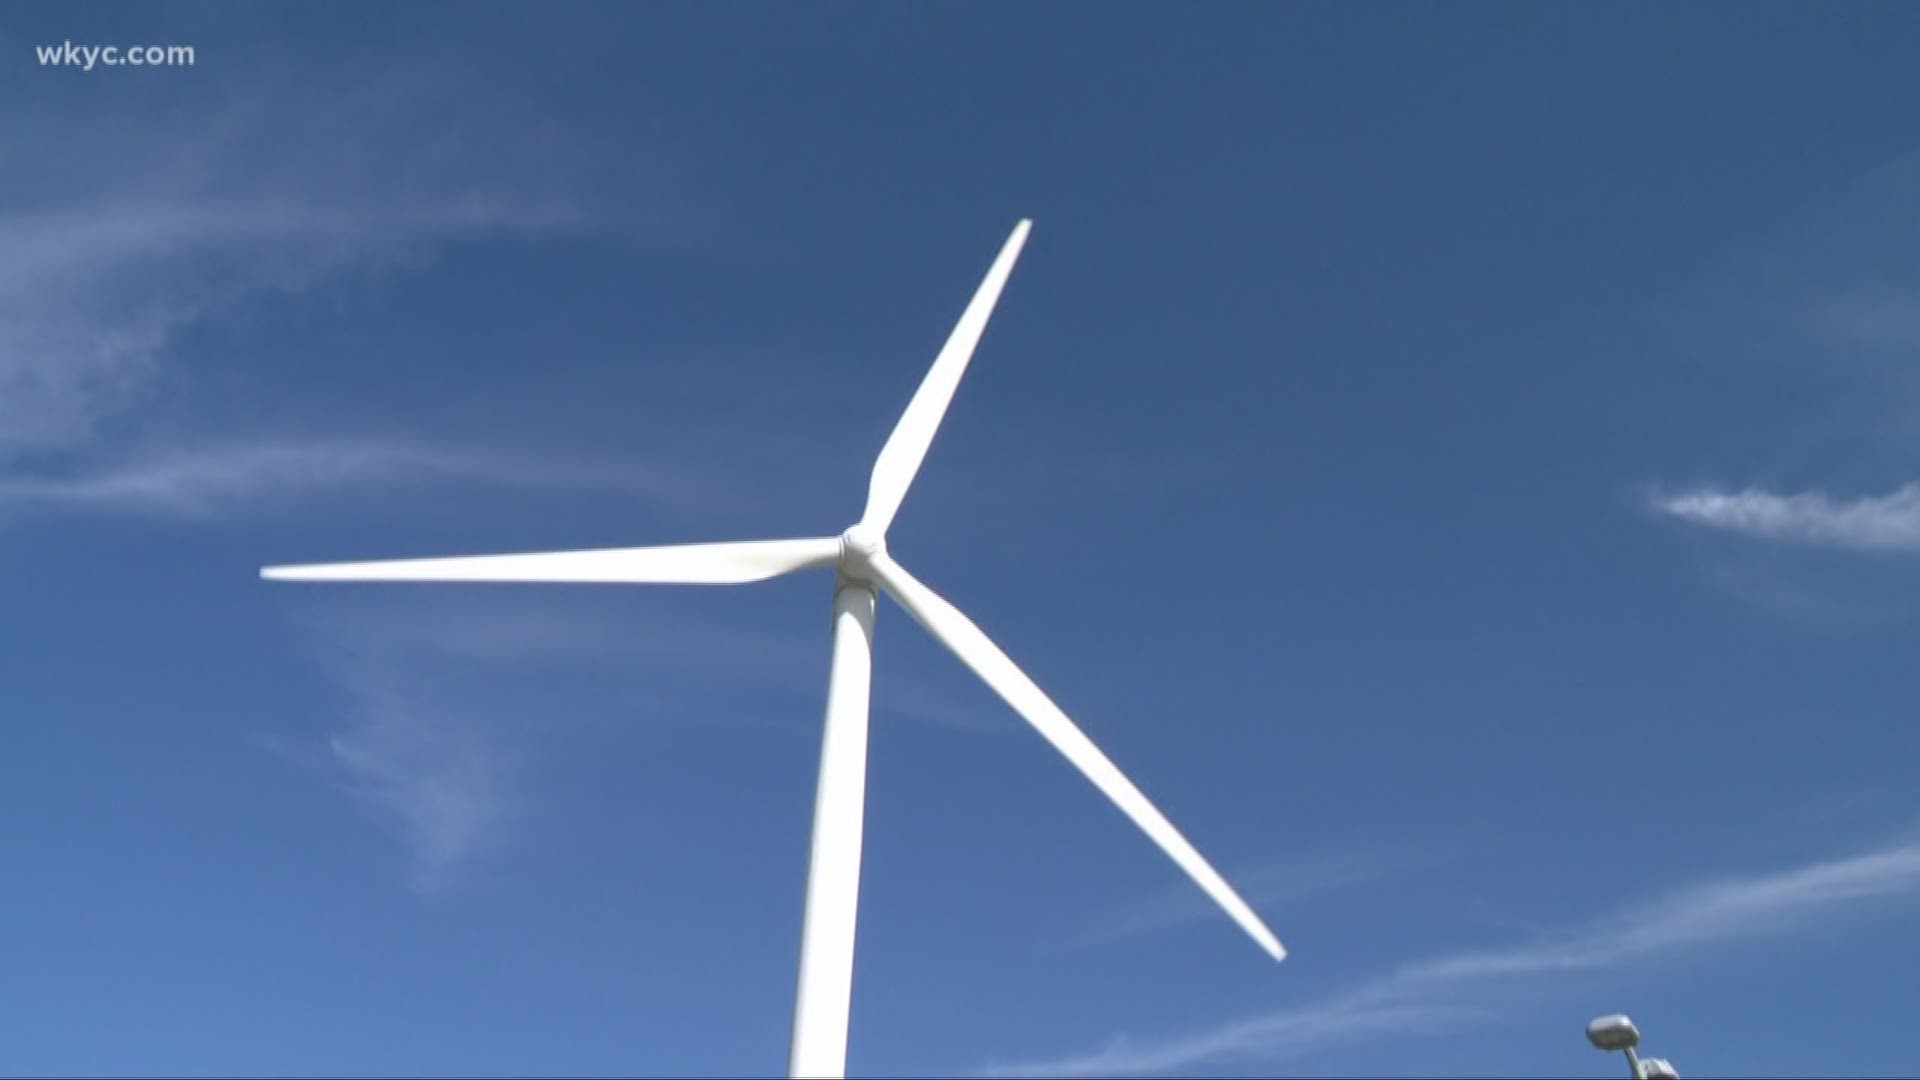 Wind turbine project fuels new 'Battle of Lake Erie'